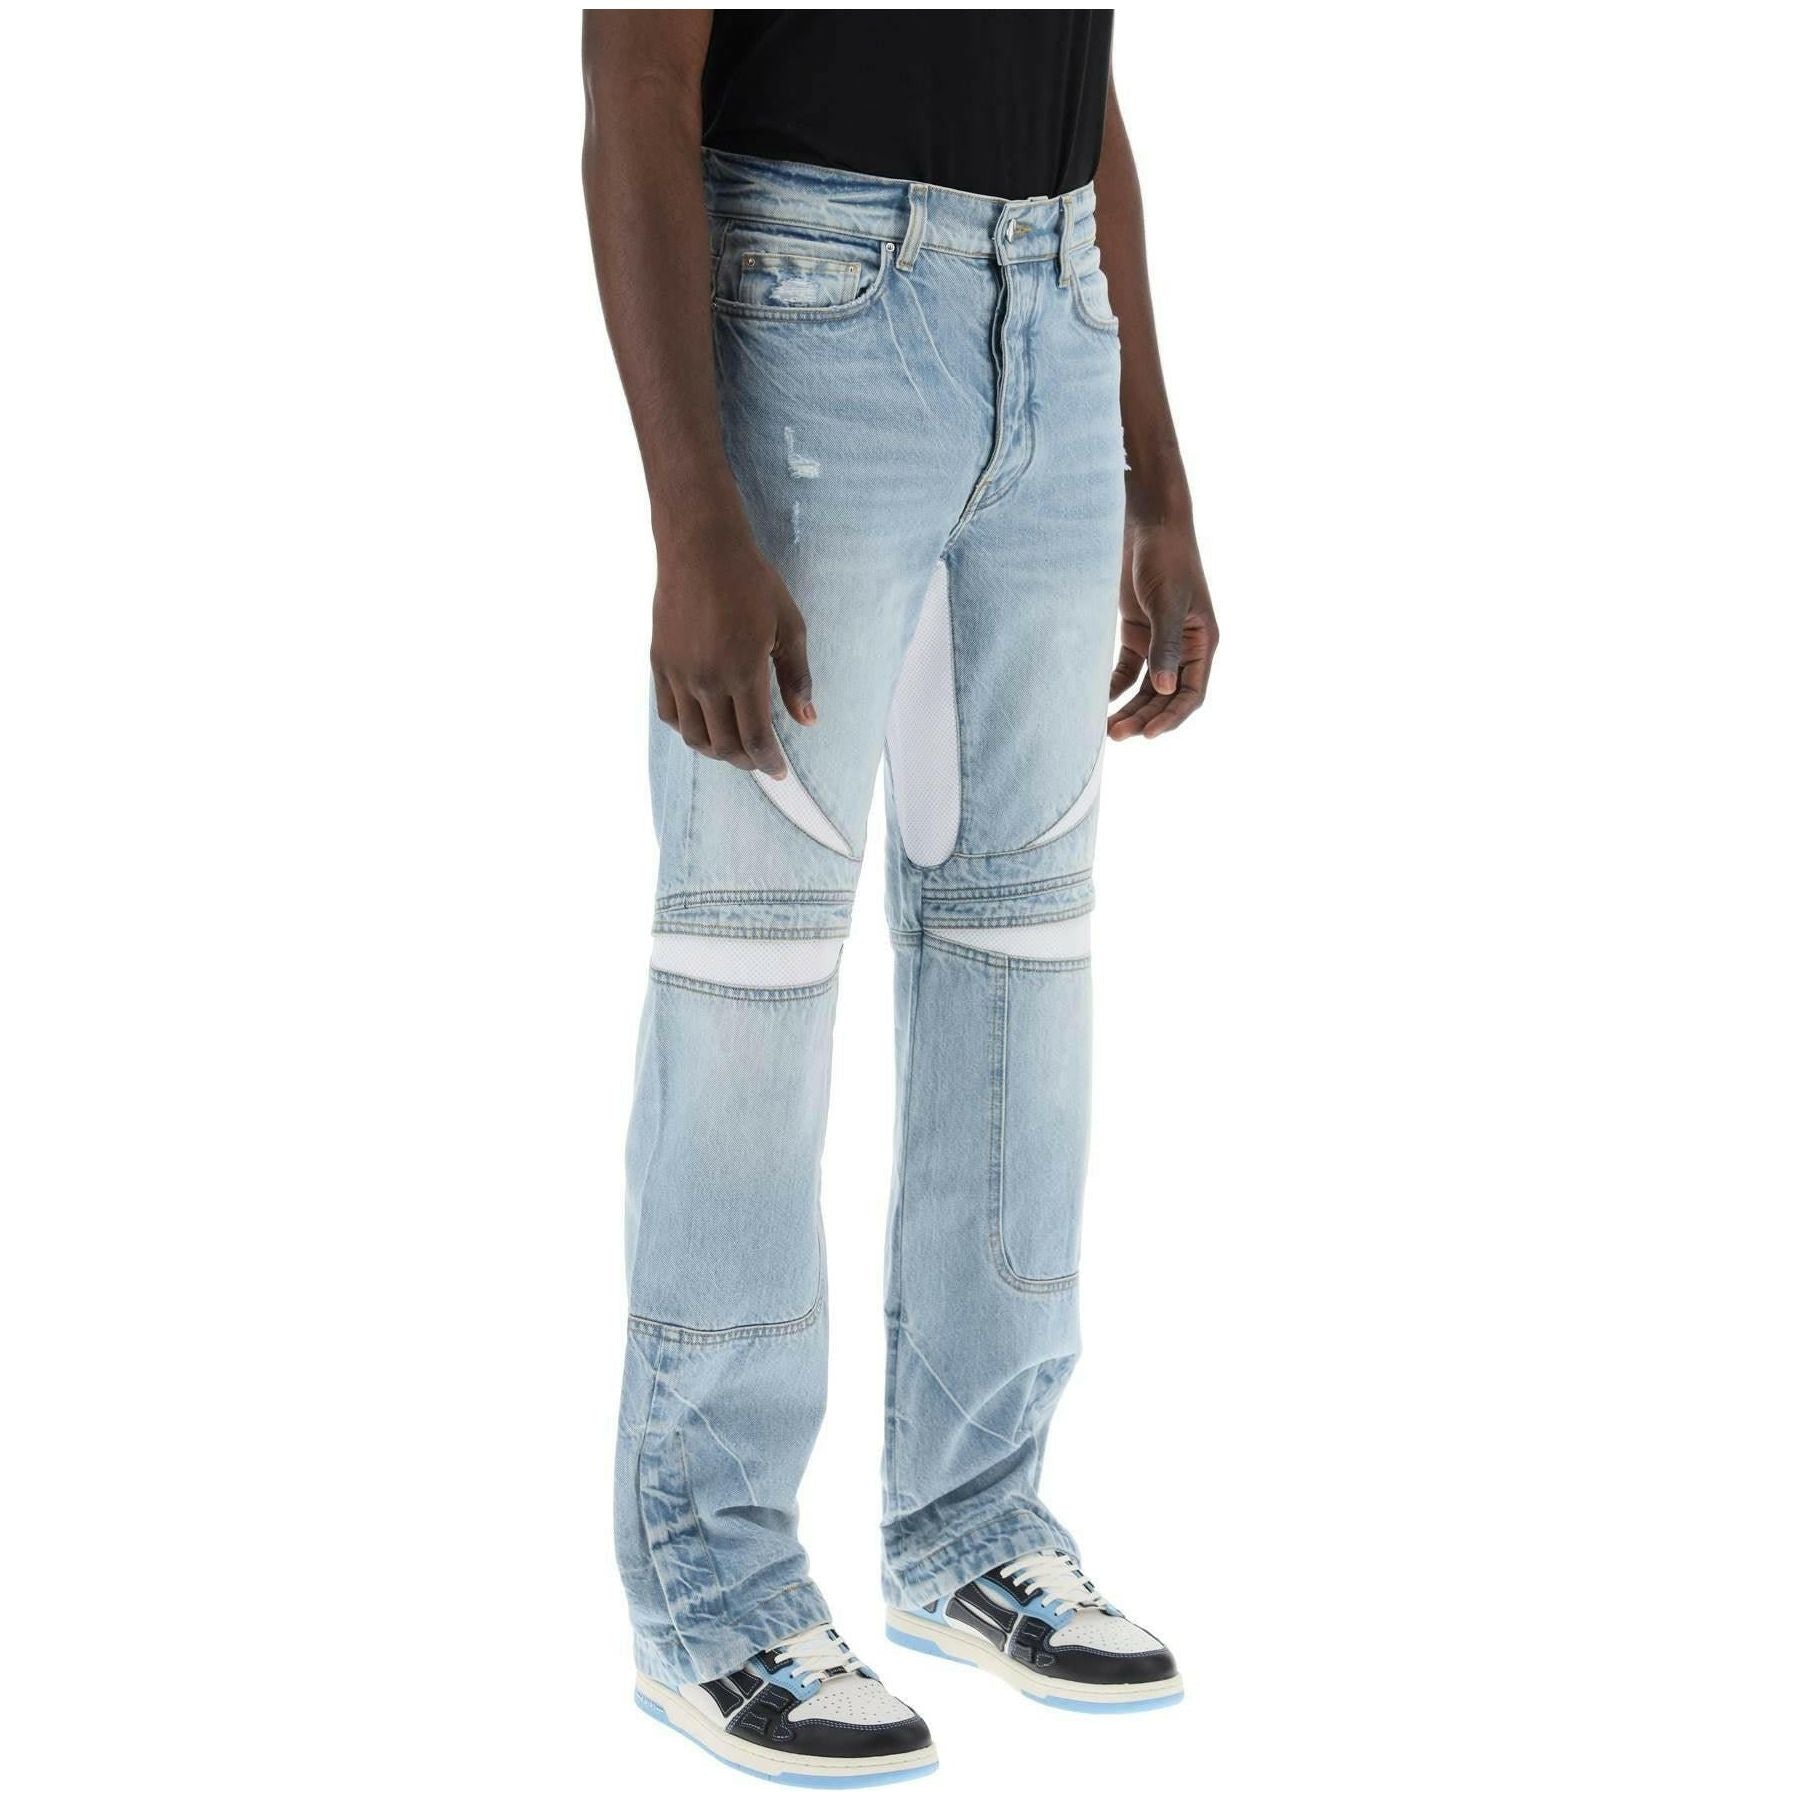 Mx 3 Jeans With Mesh Inserts AMIRI JOHN JULIA.